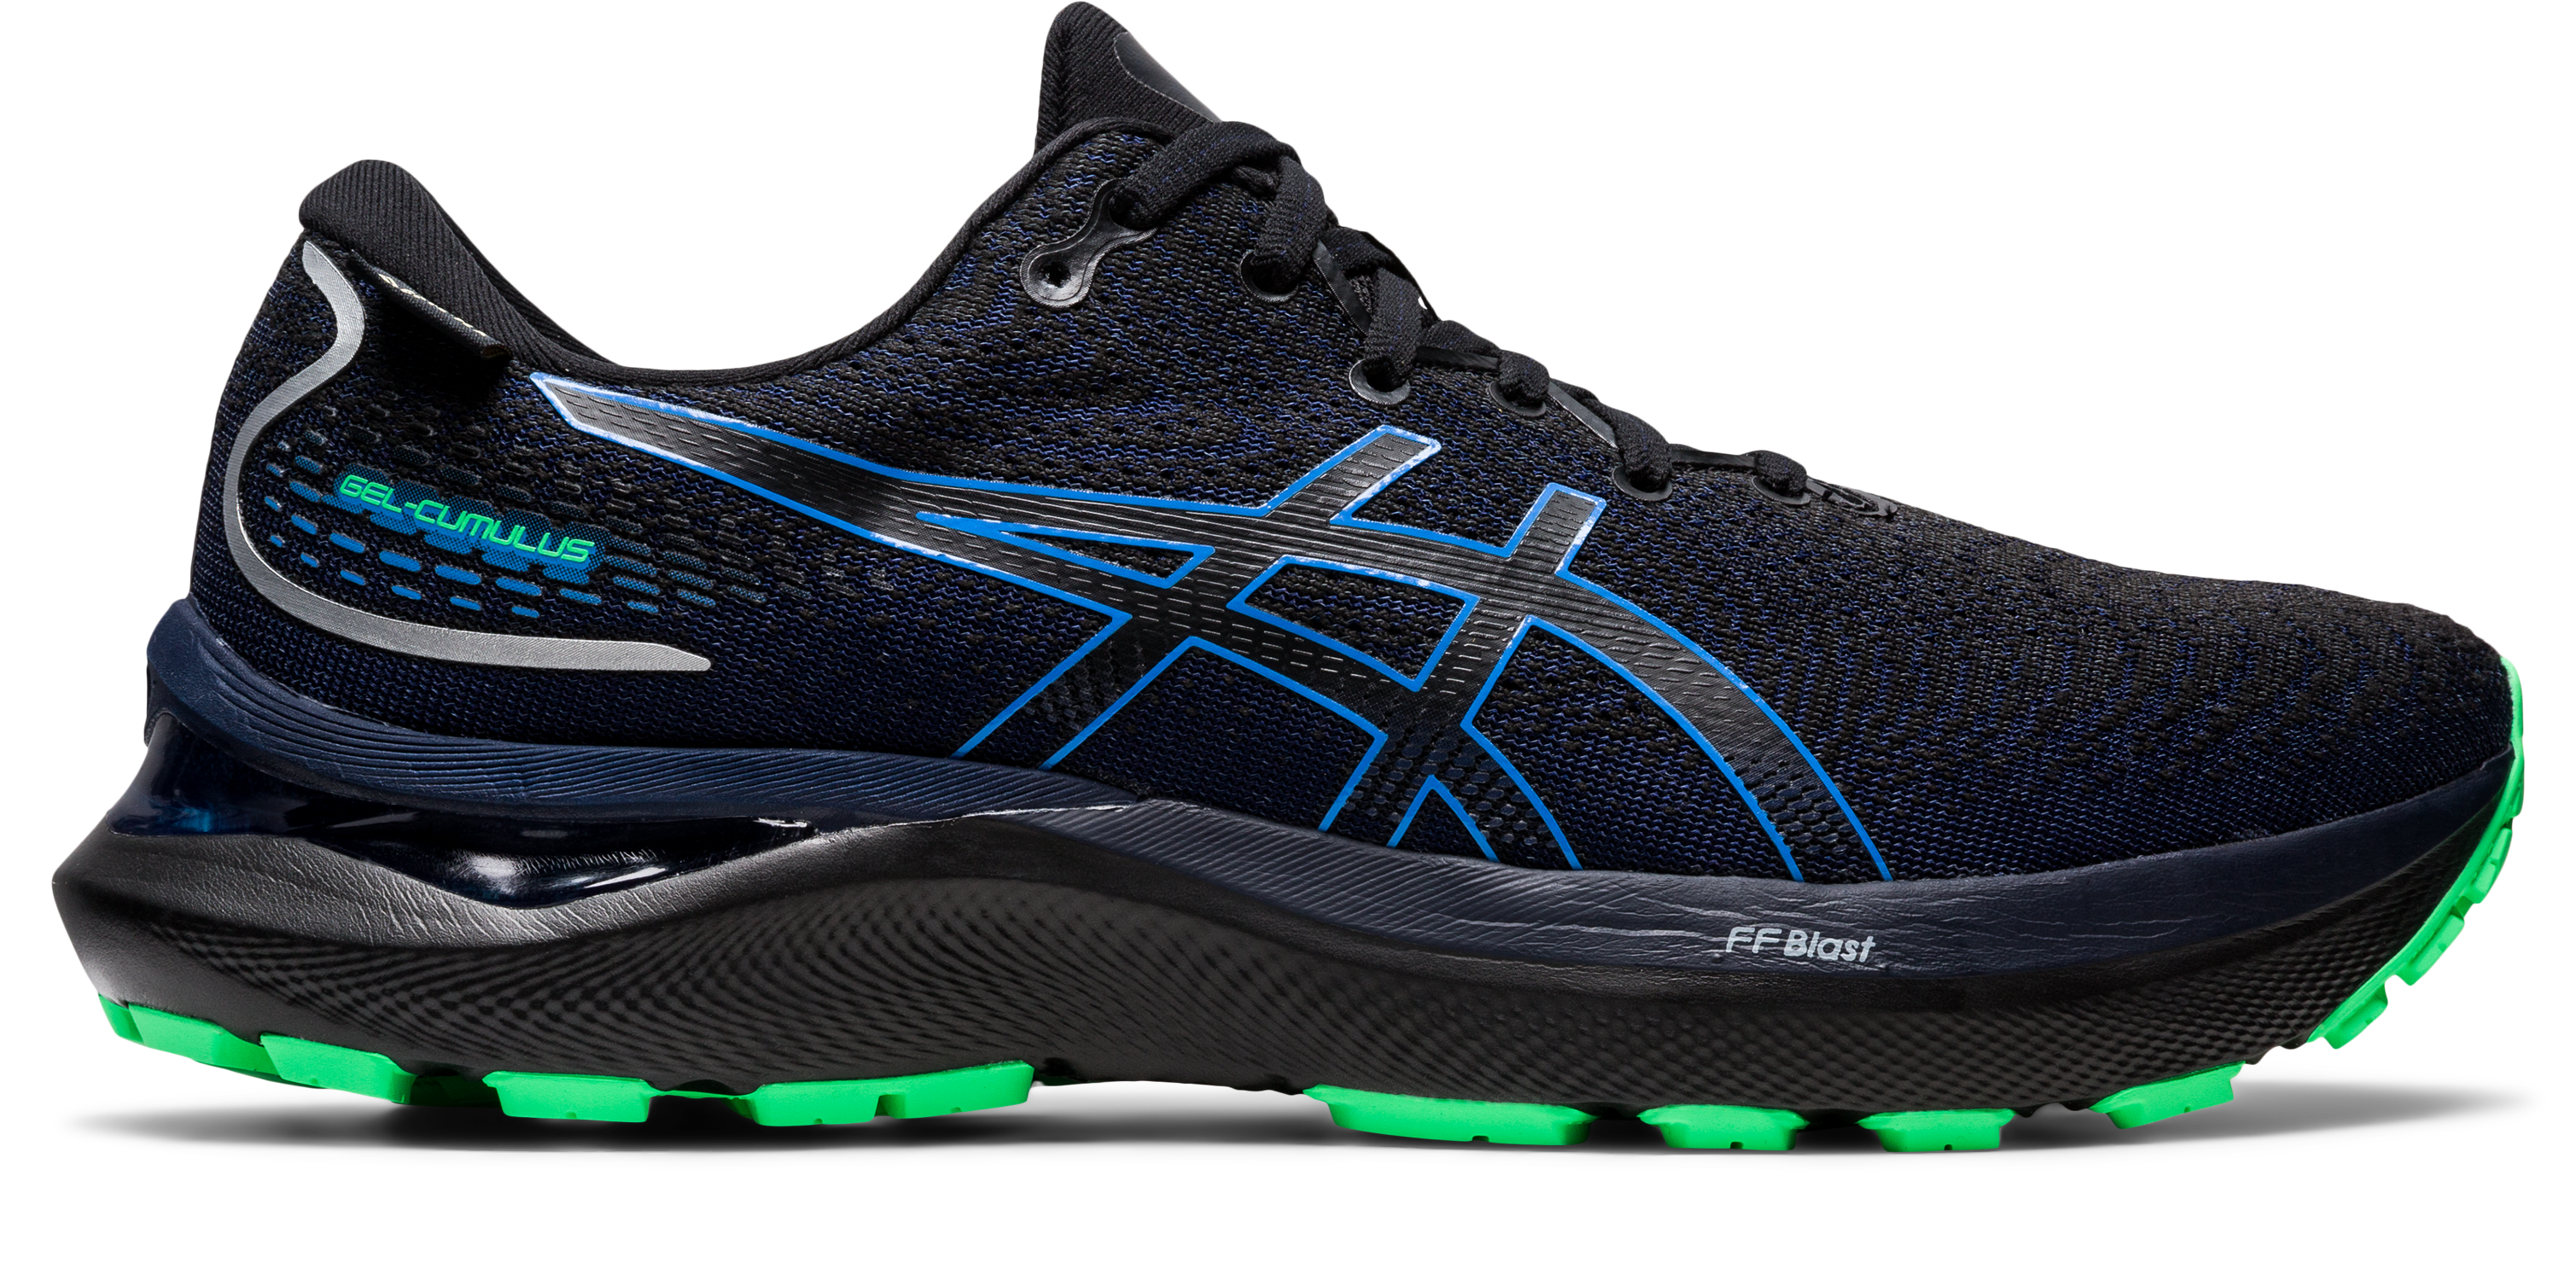 Asics Men's Gel-Cumulus 24 GTX Running Shoes in Black/Blue Coast